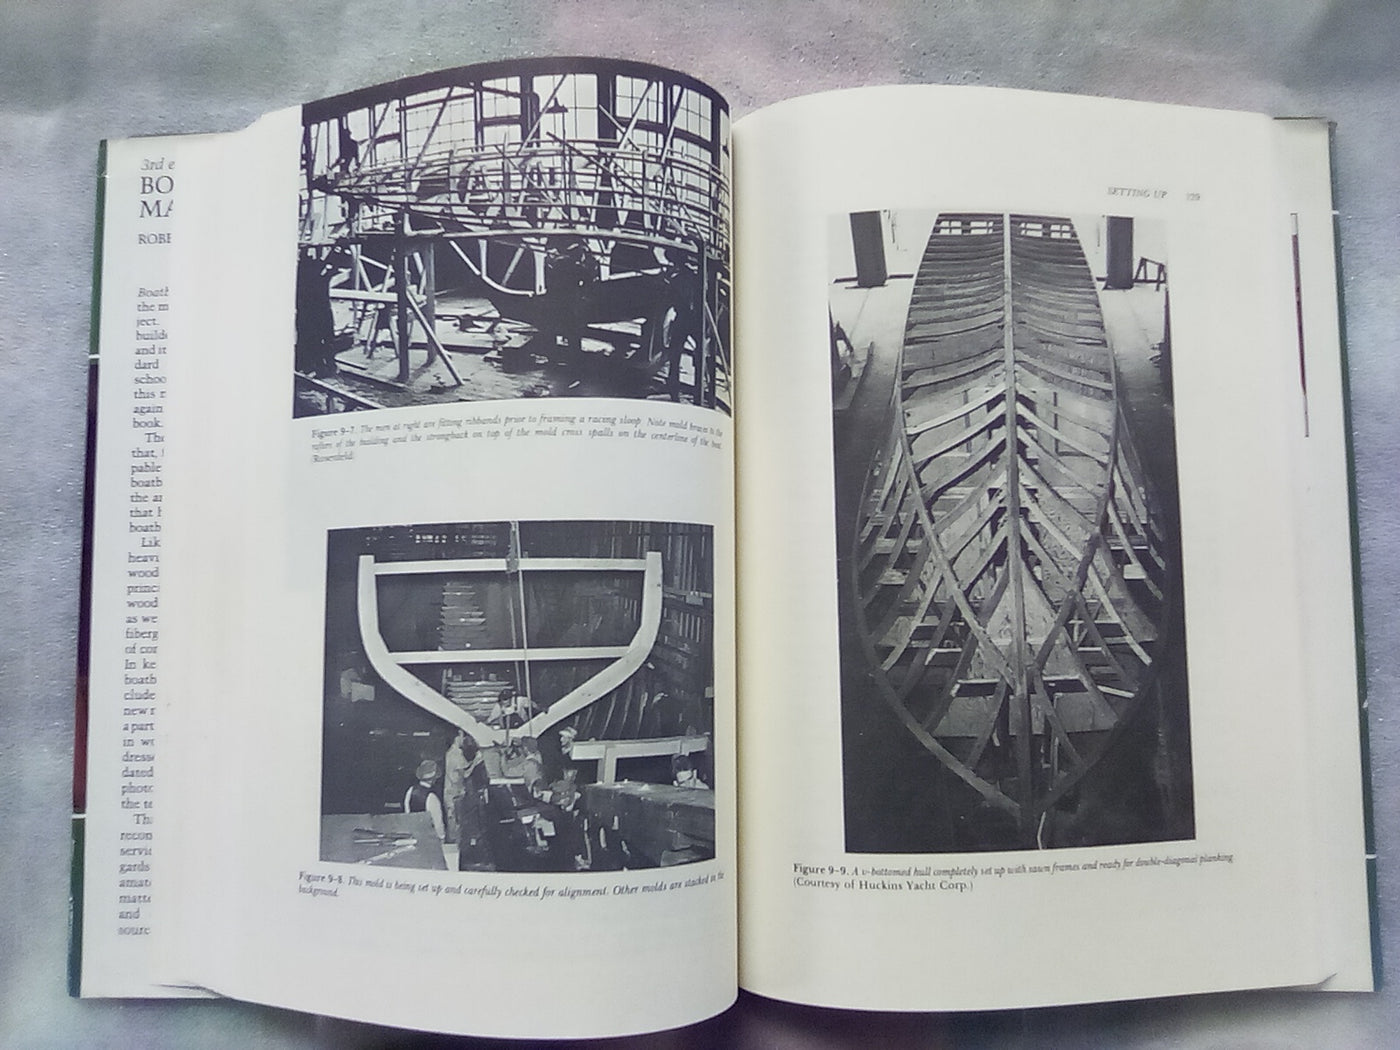 Boatbuilding Manual (3rd. Edition) by Robert M. Steward